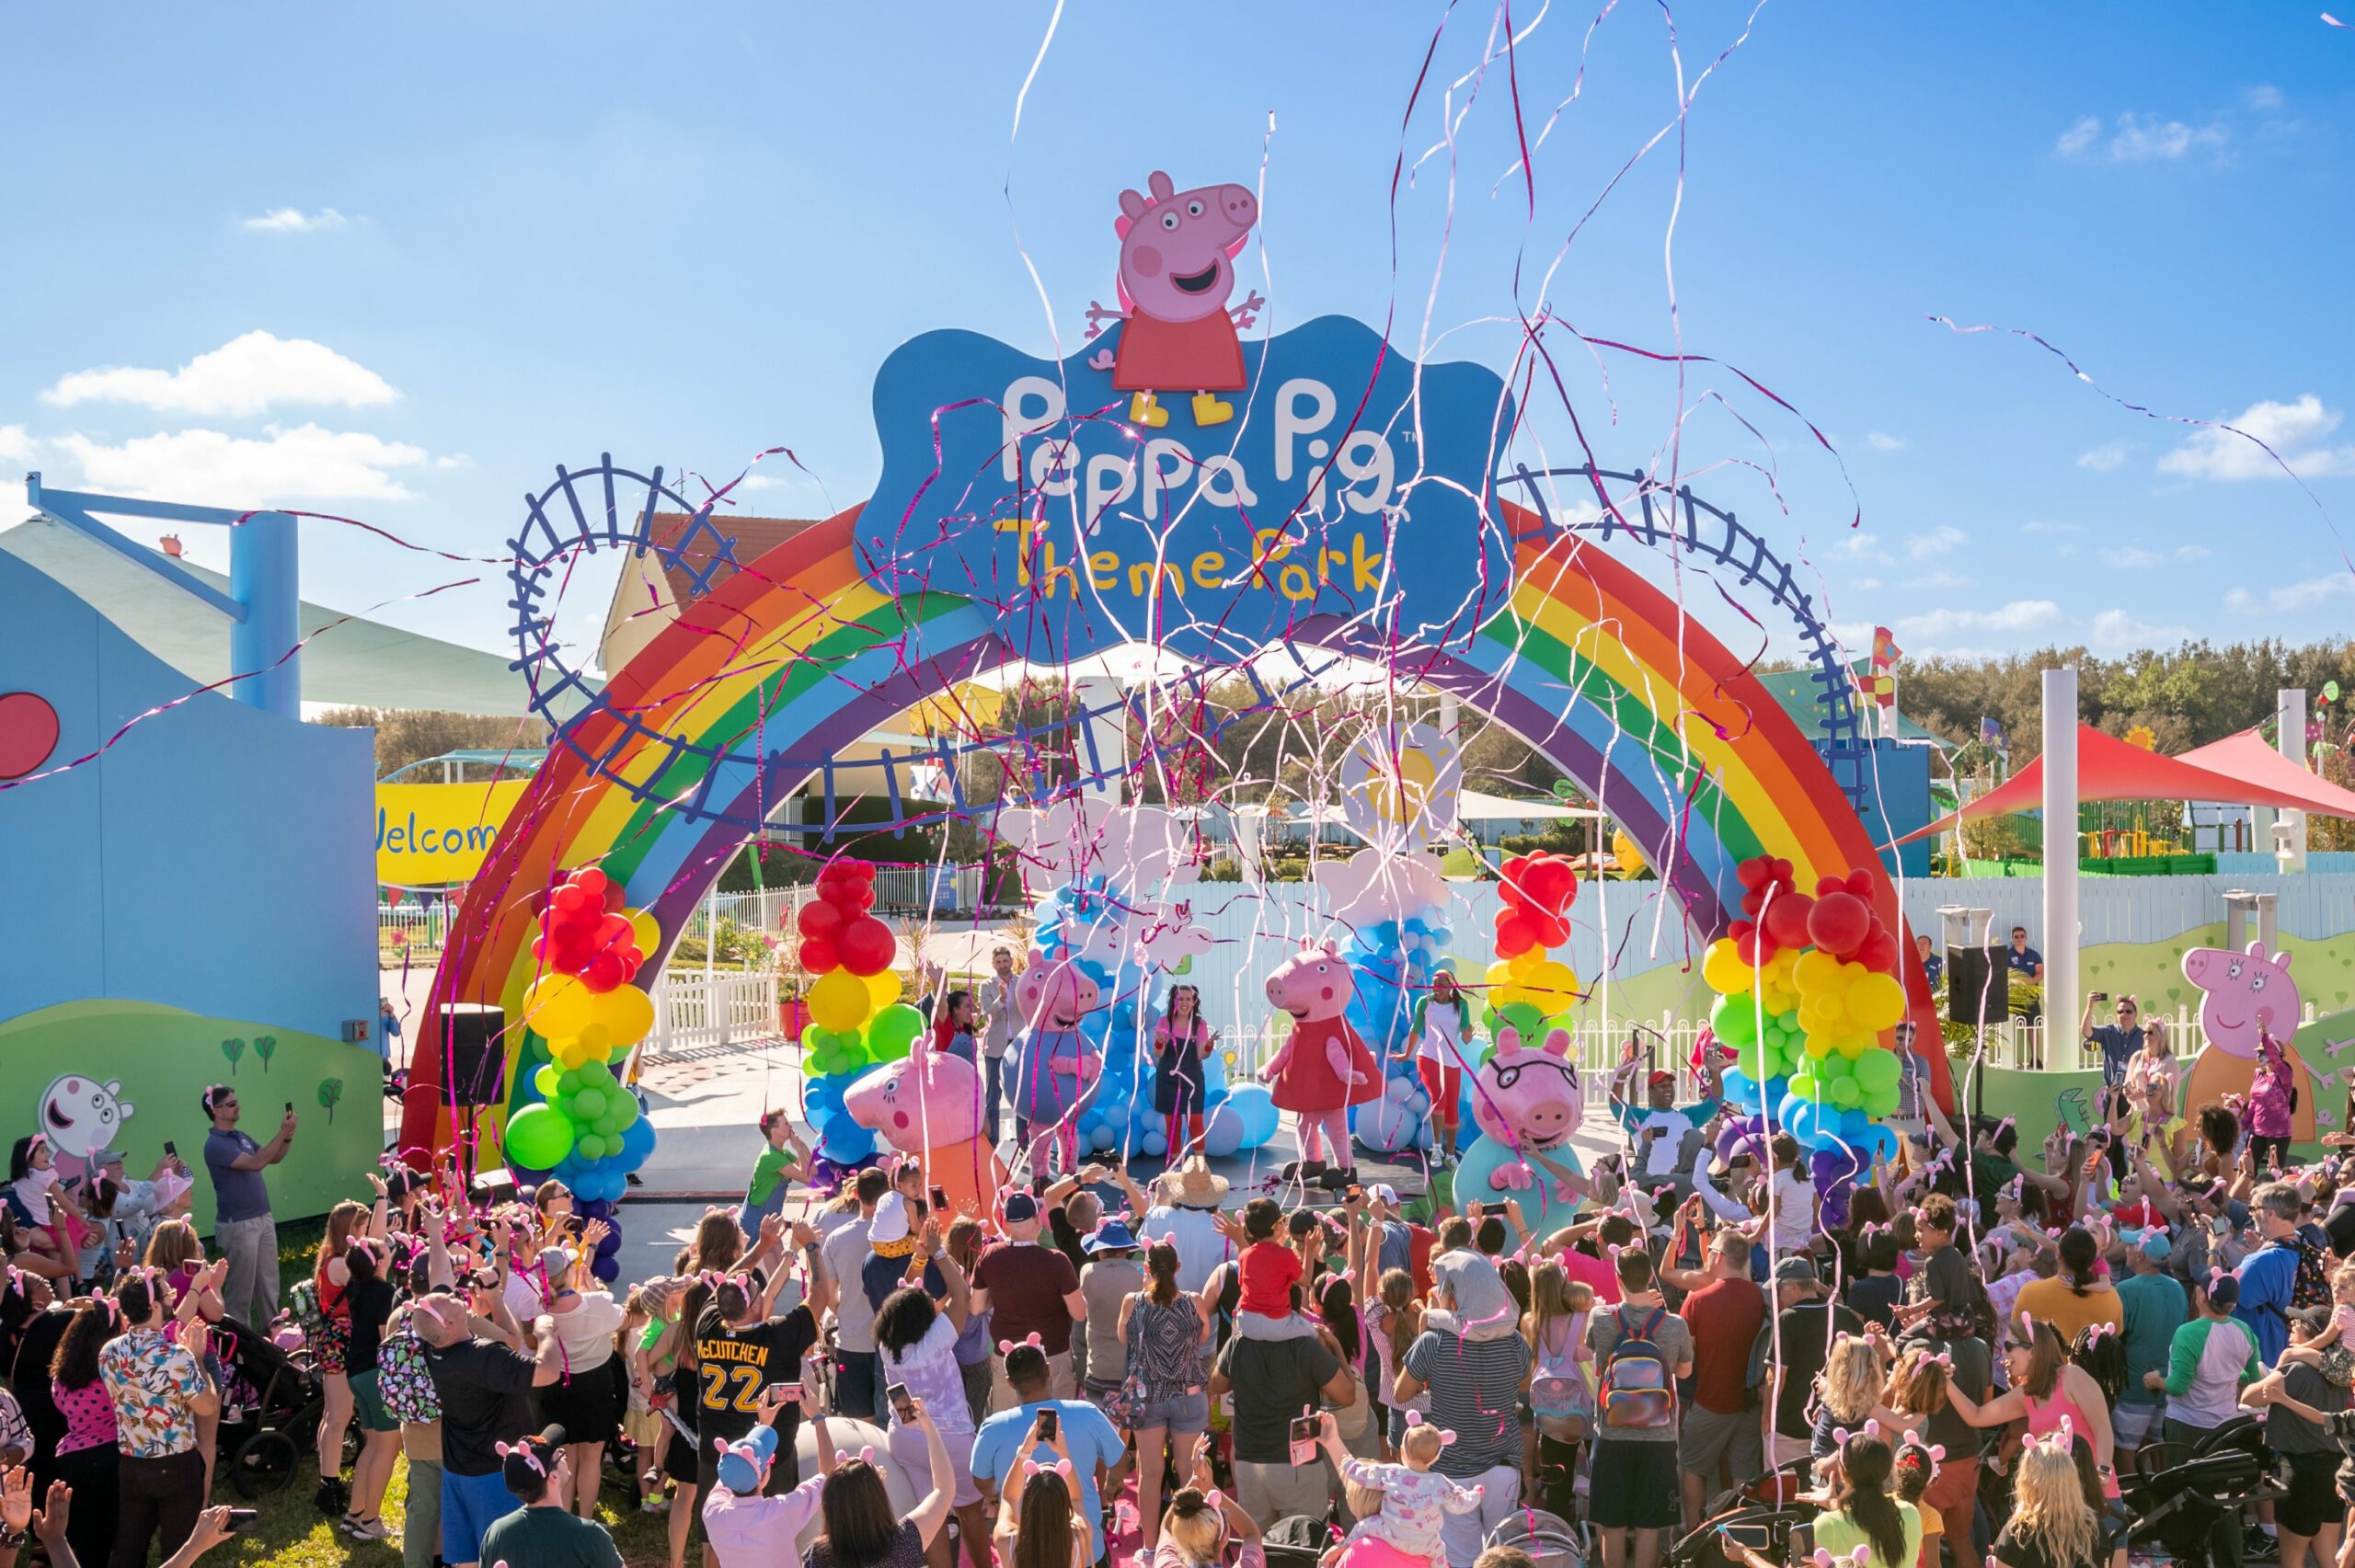 Peppa Pig Theme Park - Visit Central Florida